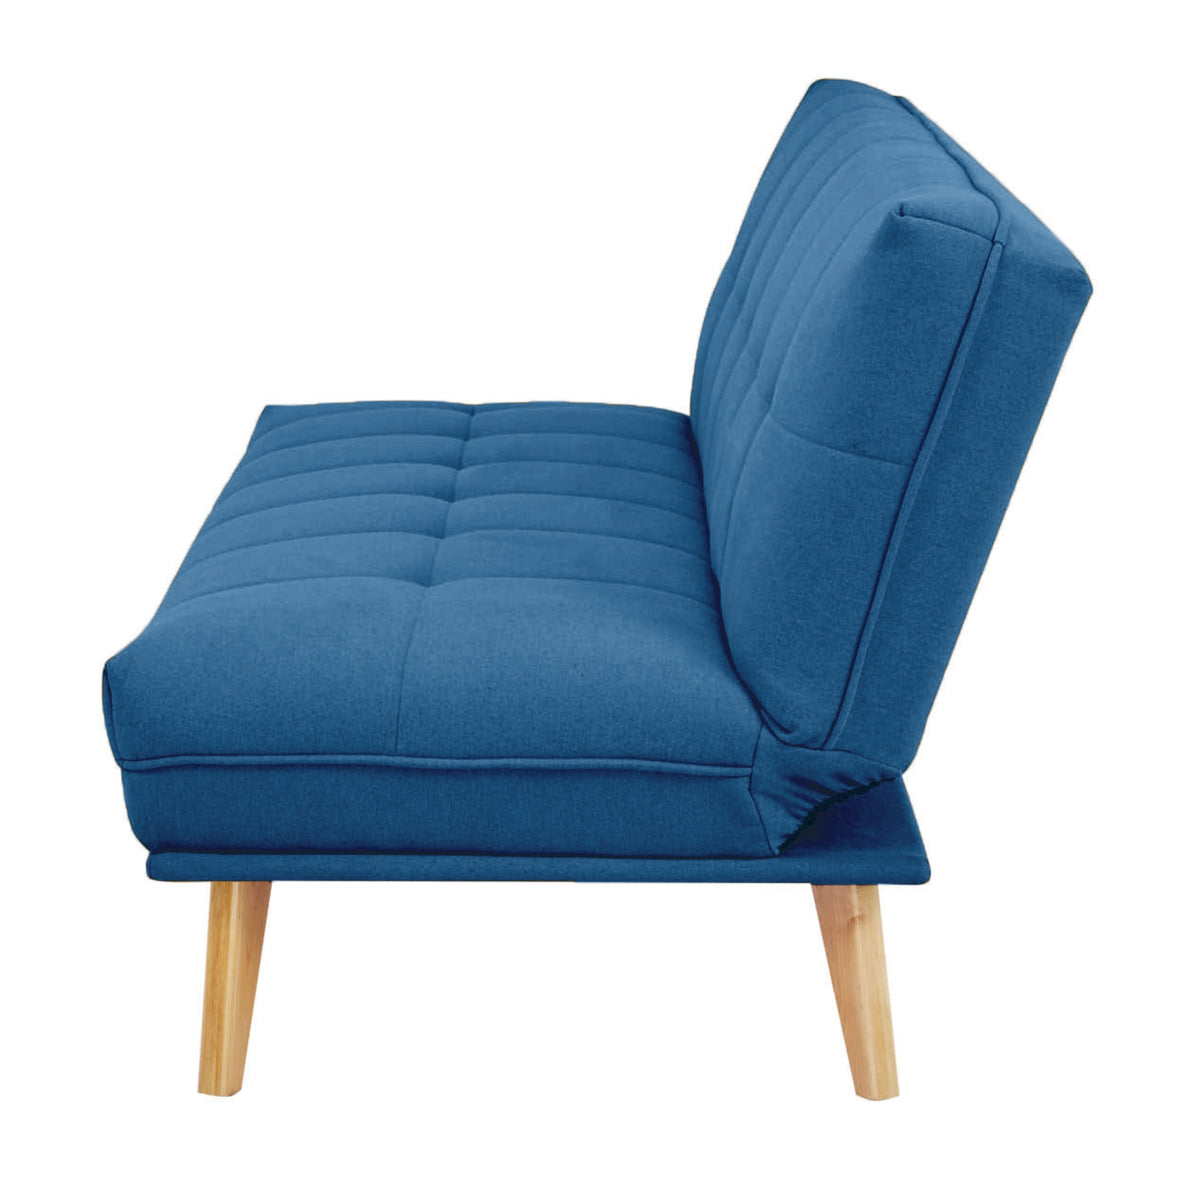 Jovie 3 Seater Fabric Sofa Bed Blue 